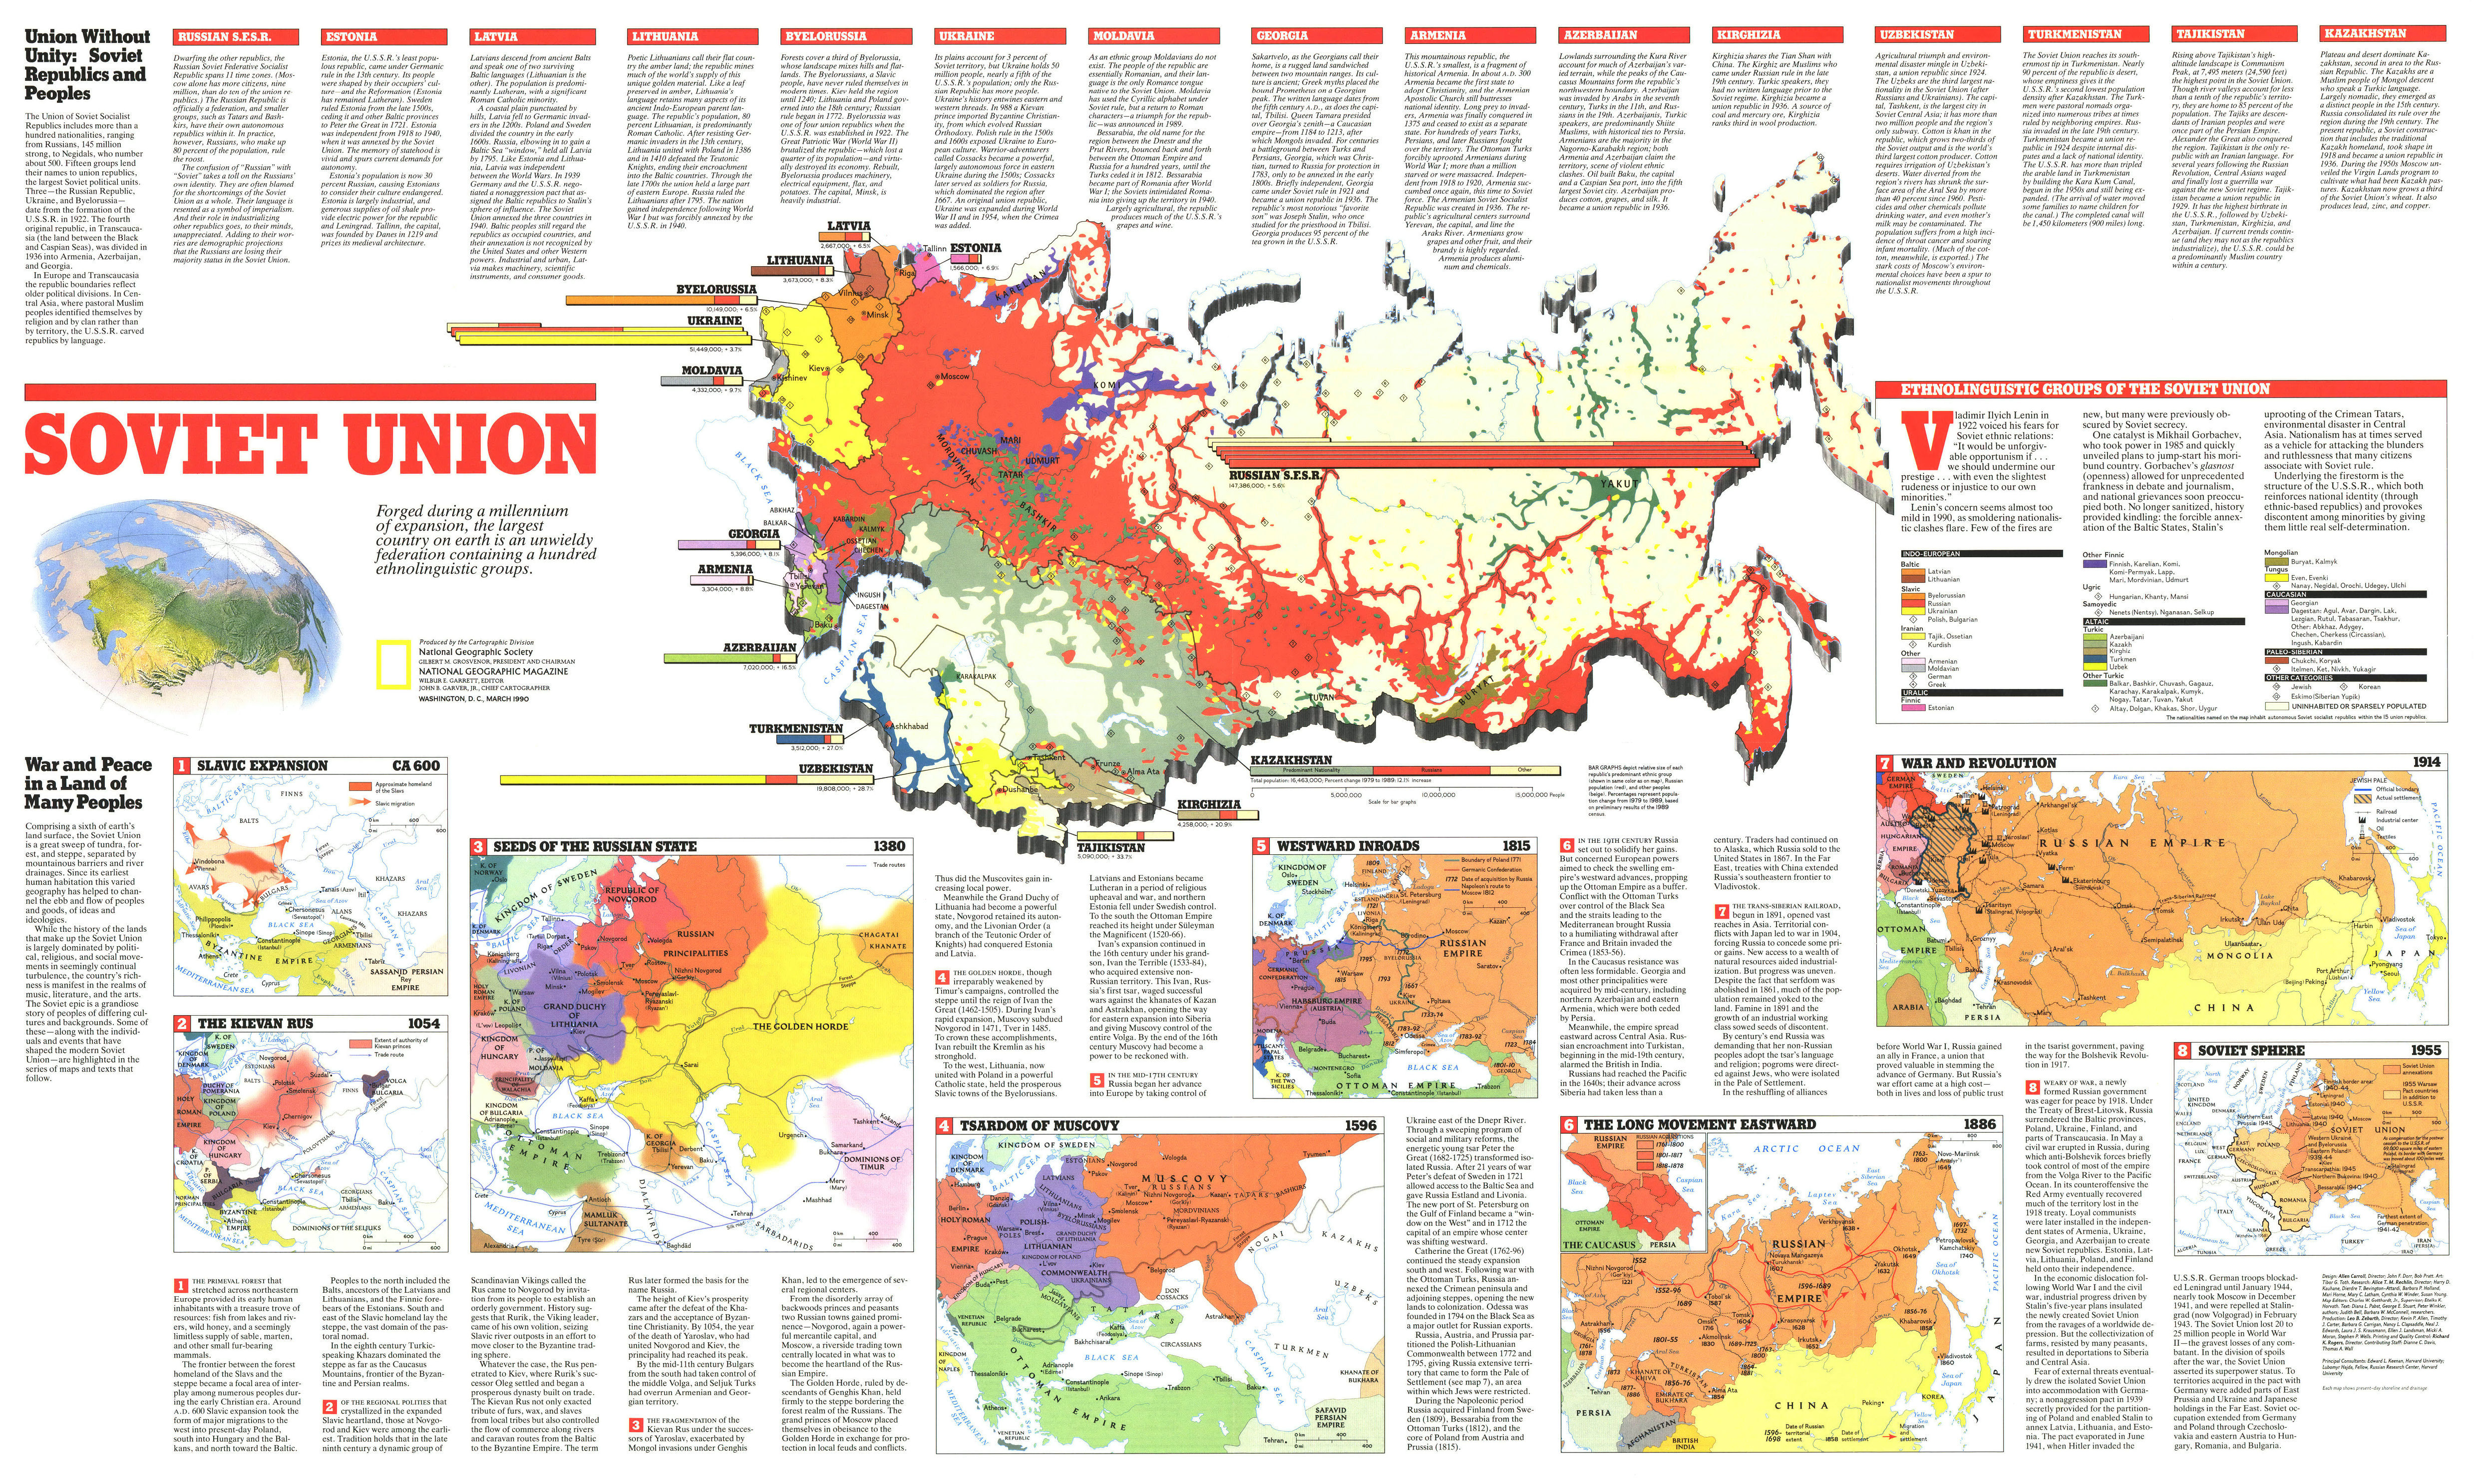 National Geografic - Mapy - Russia - Soviet Union 2 1990.jpg